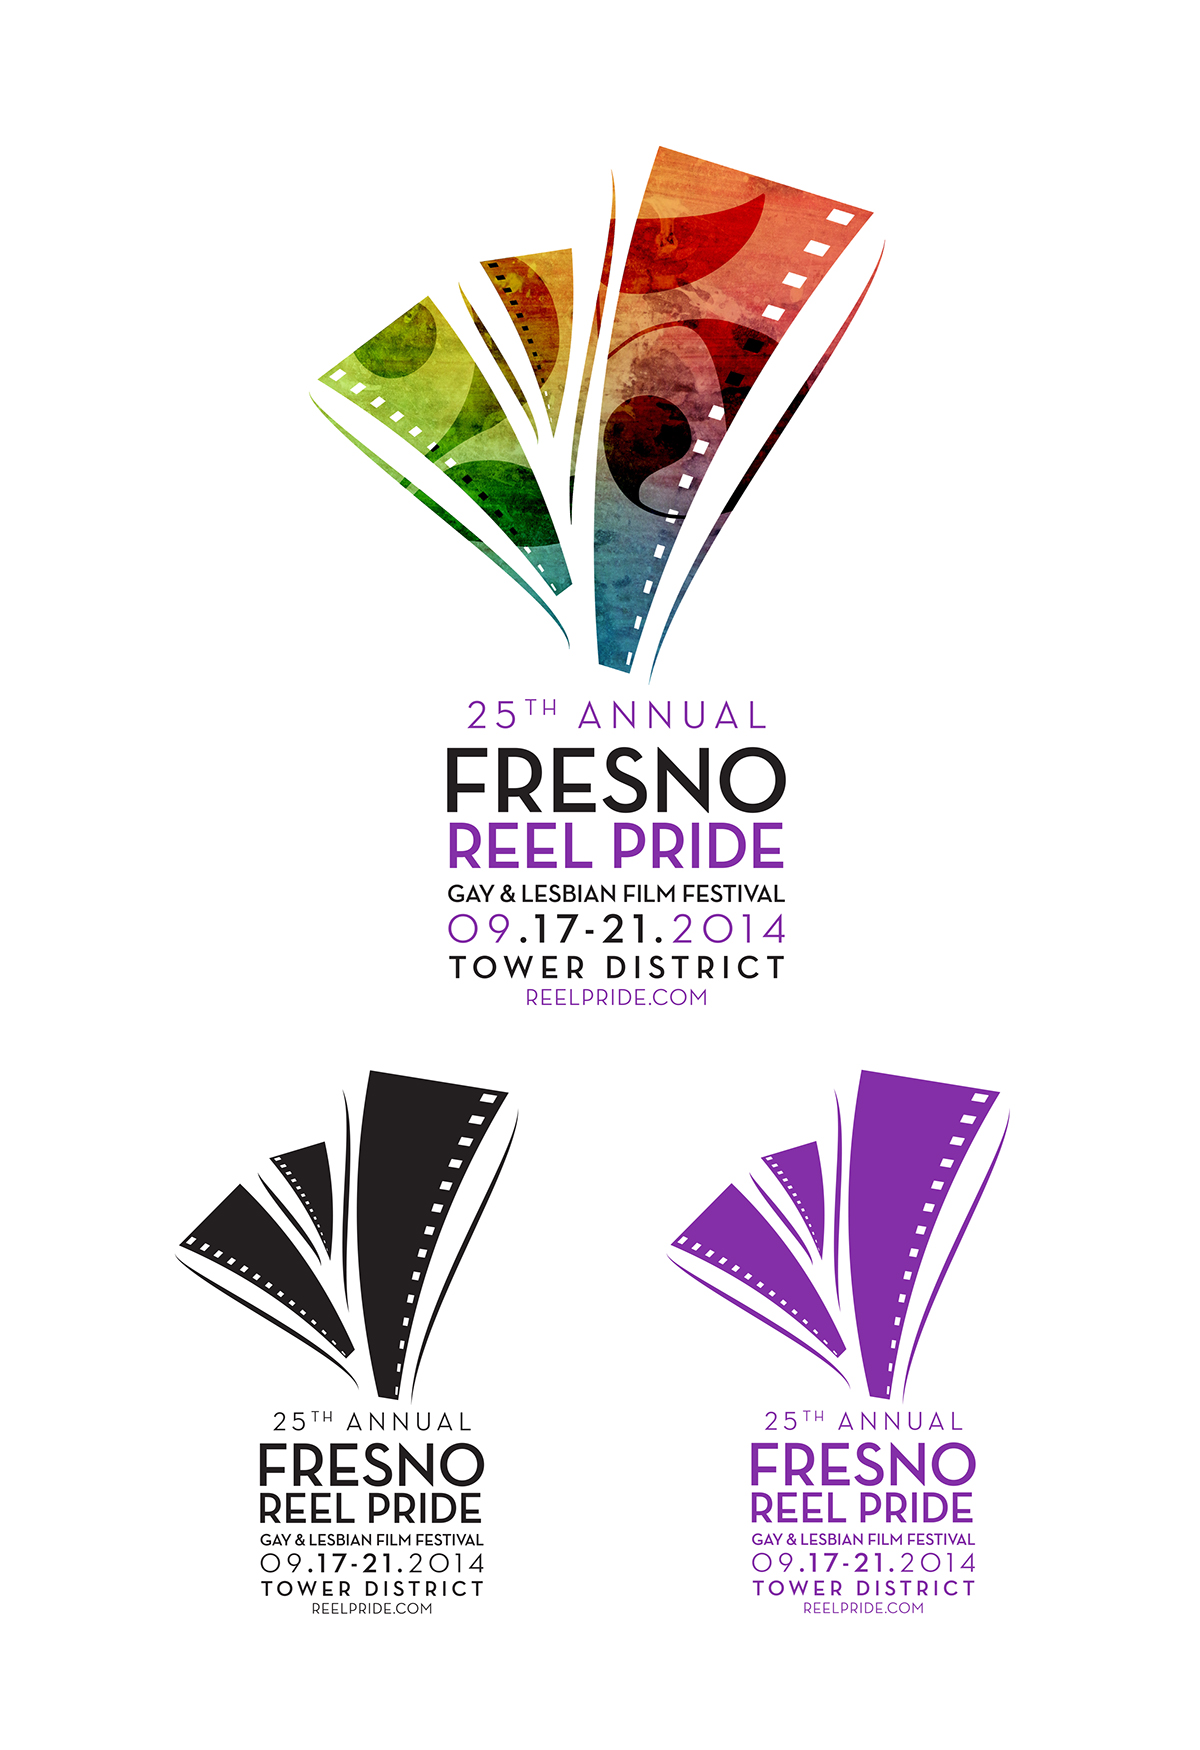 campaign poster logo identity annual image Fresno reel pride LGBT film festival